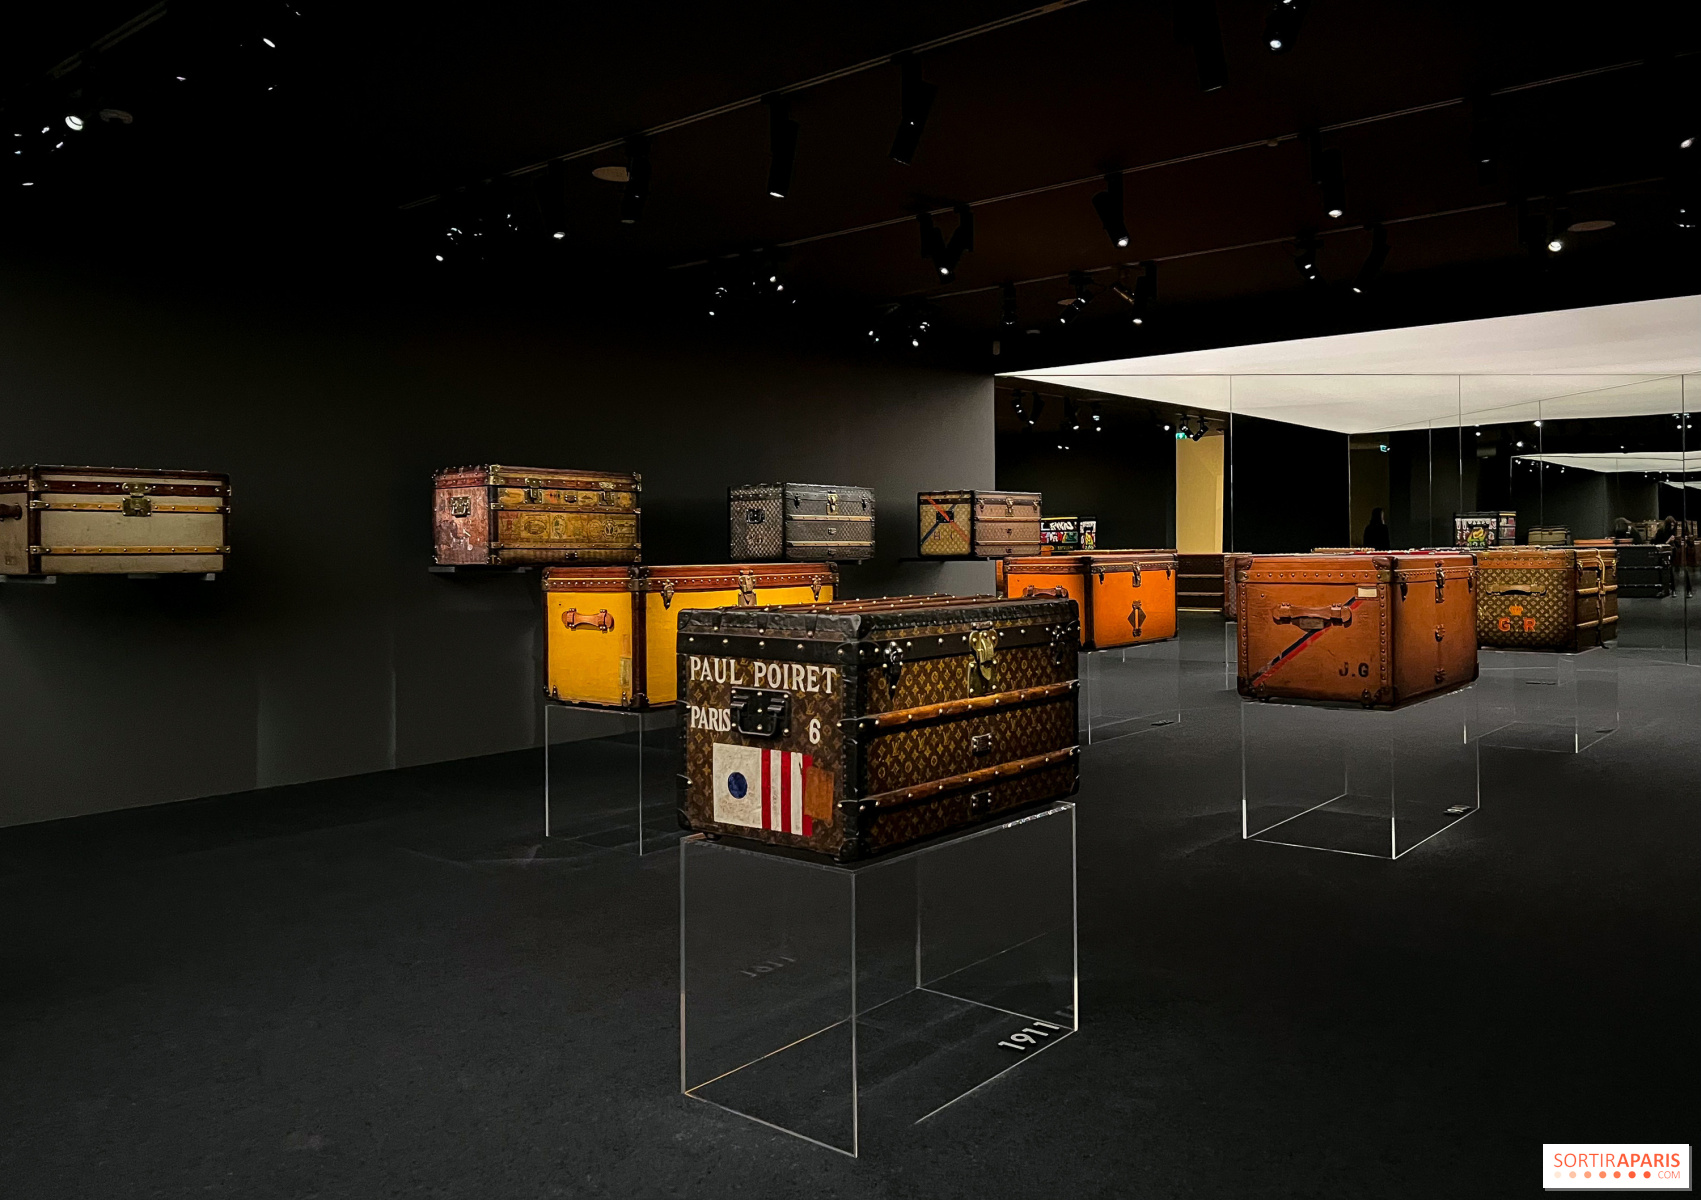 Louis Vuitton family home presents Malle Courrier exhibition